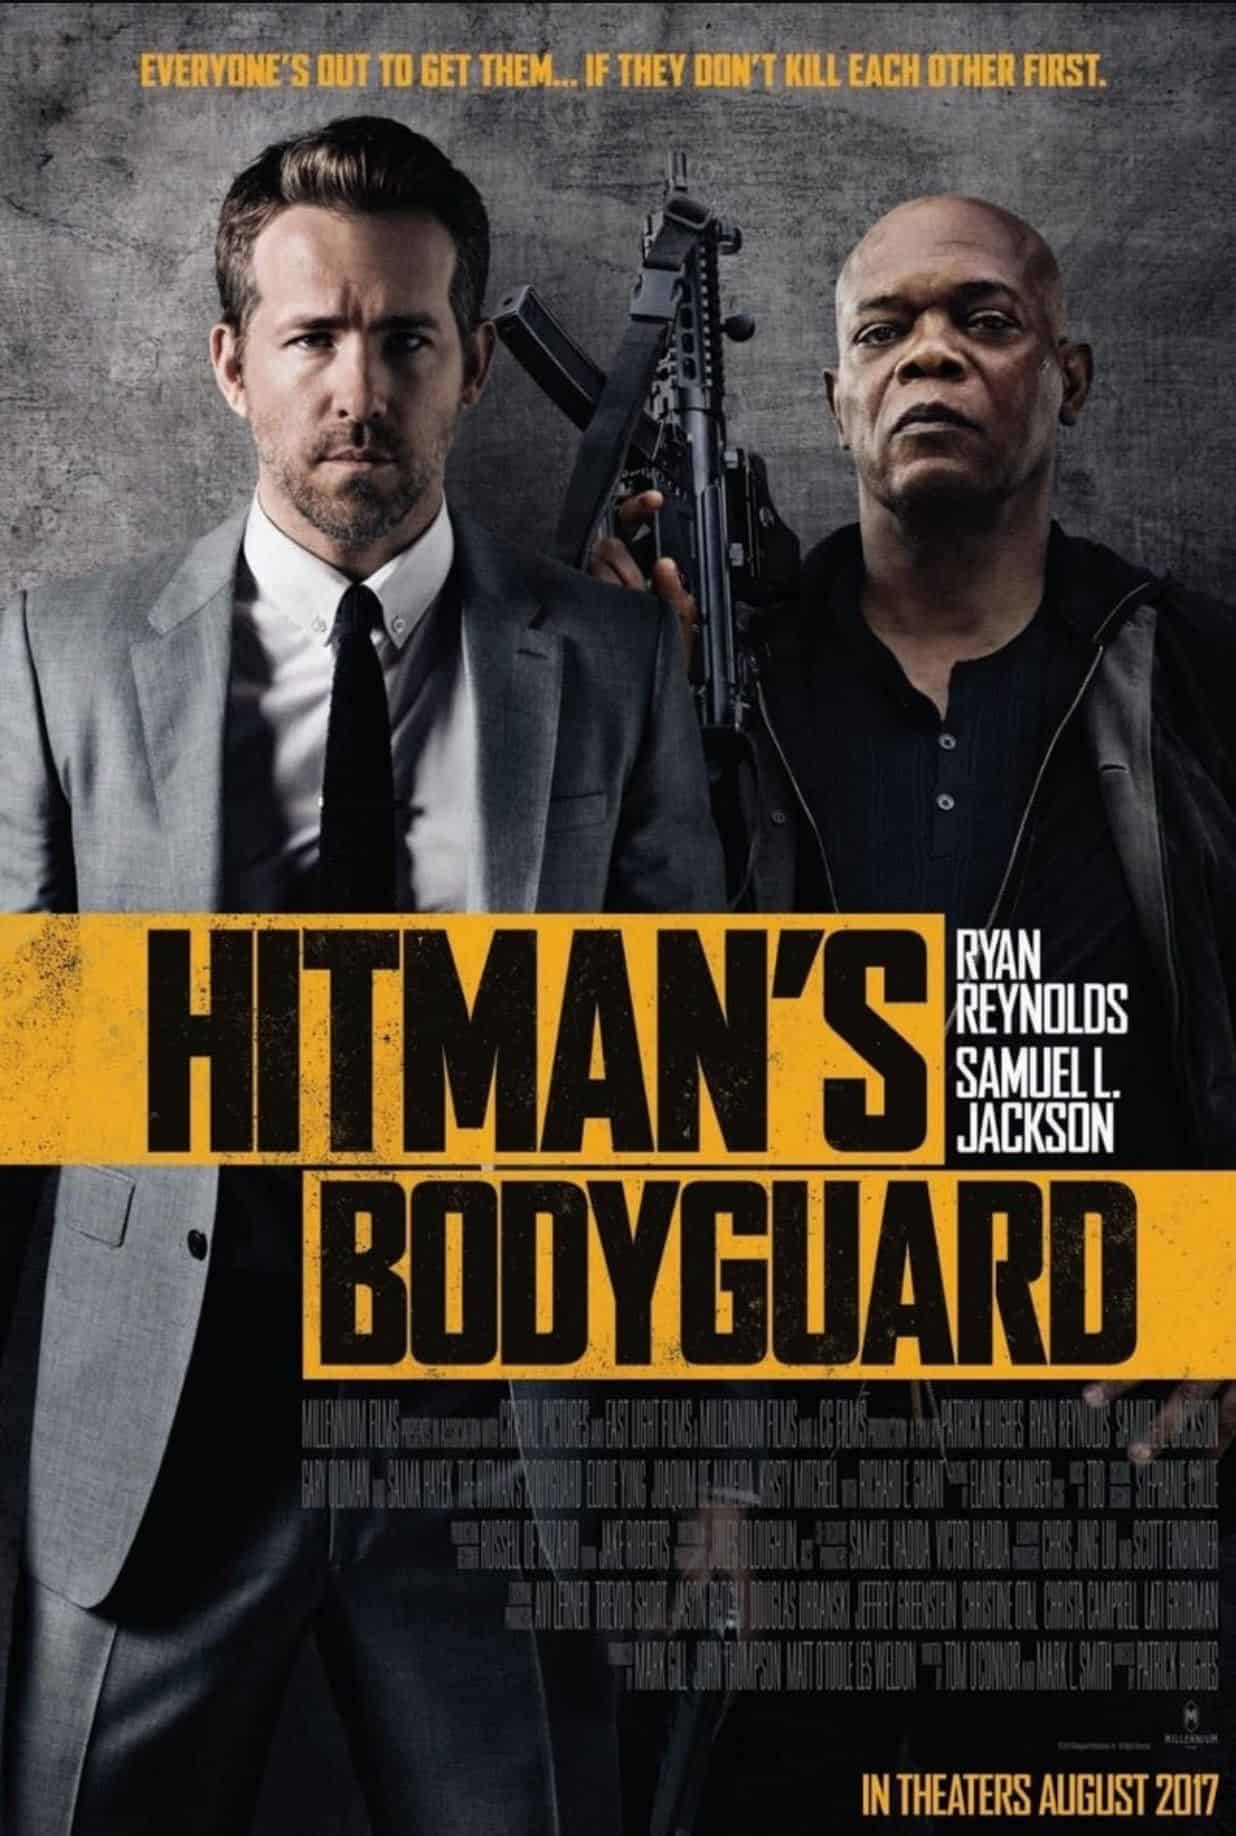 The Hitman’s Bodyguard (2017)